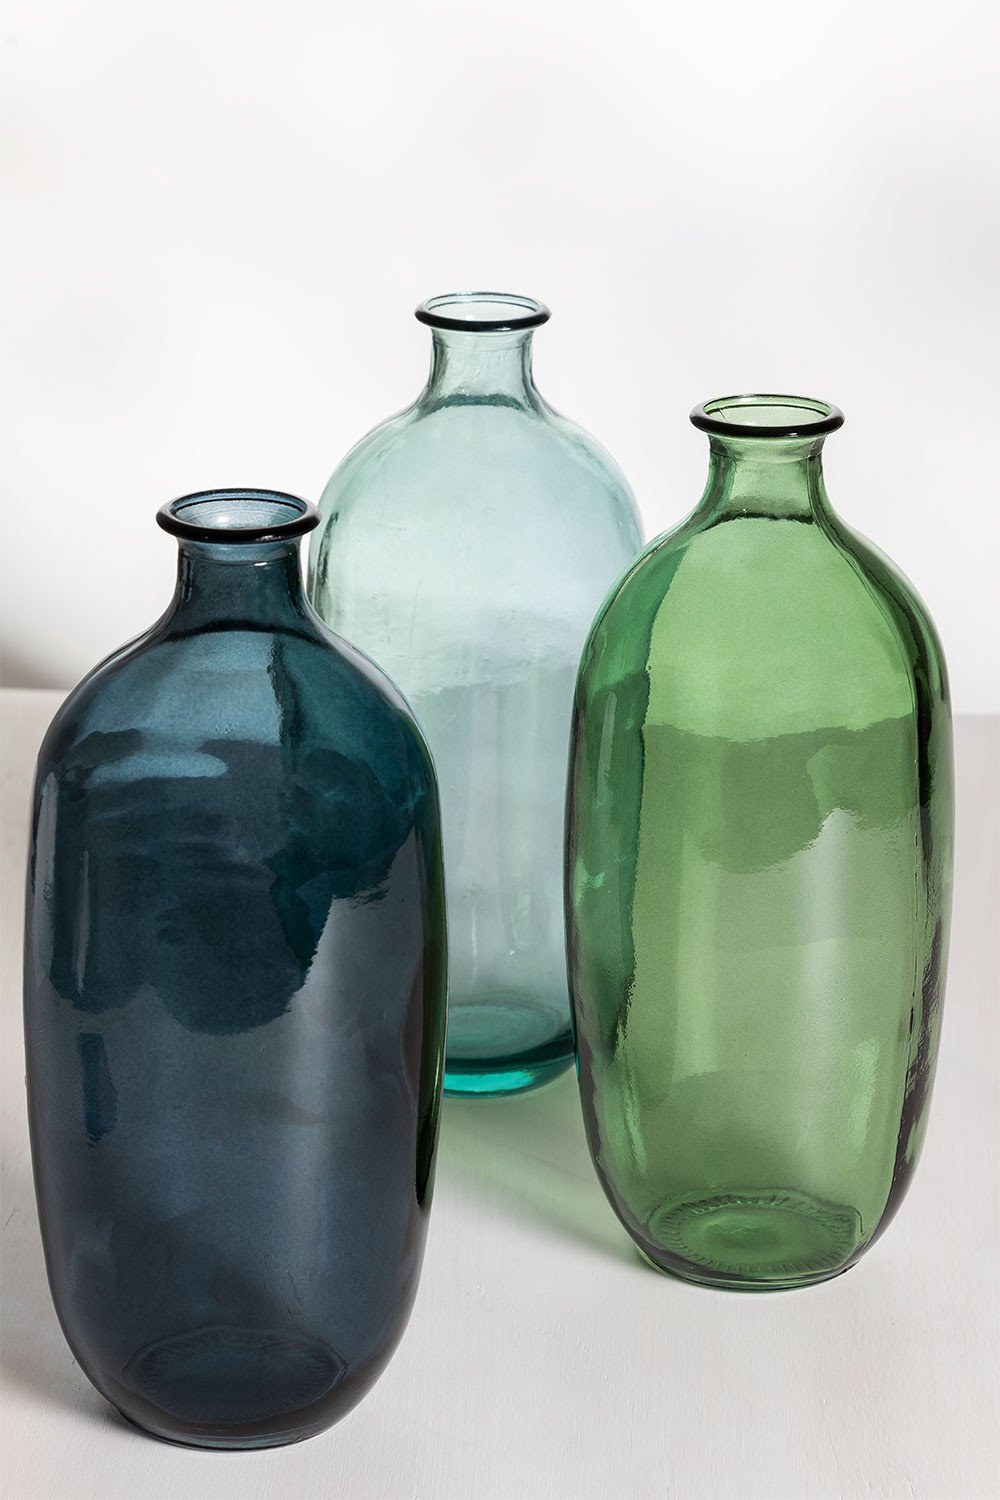 https://cdn.sklum.com/it/wk/1031402/bottiglia-di-vetro-riciclato-lumas.jpg?cf-resize=gallery